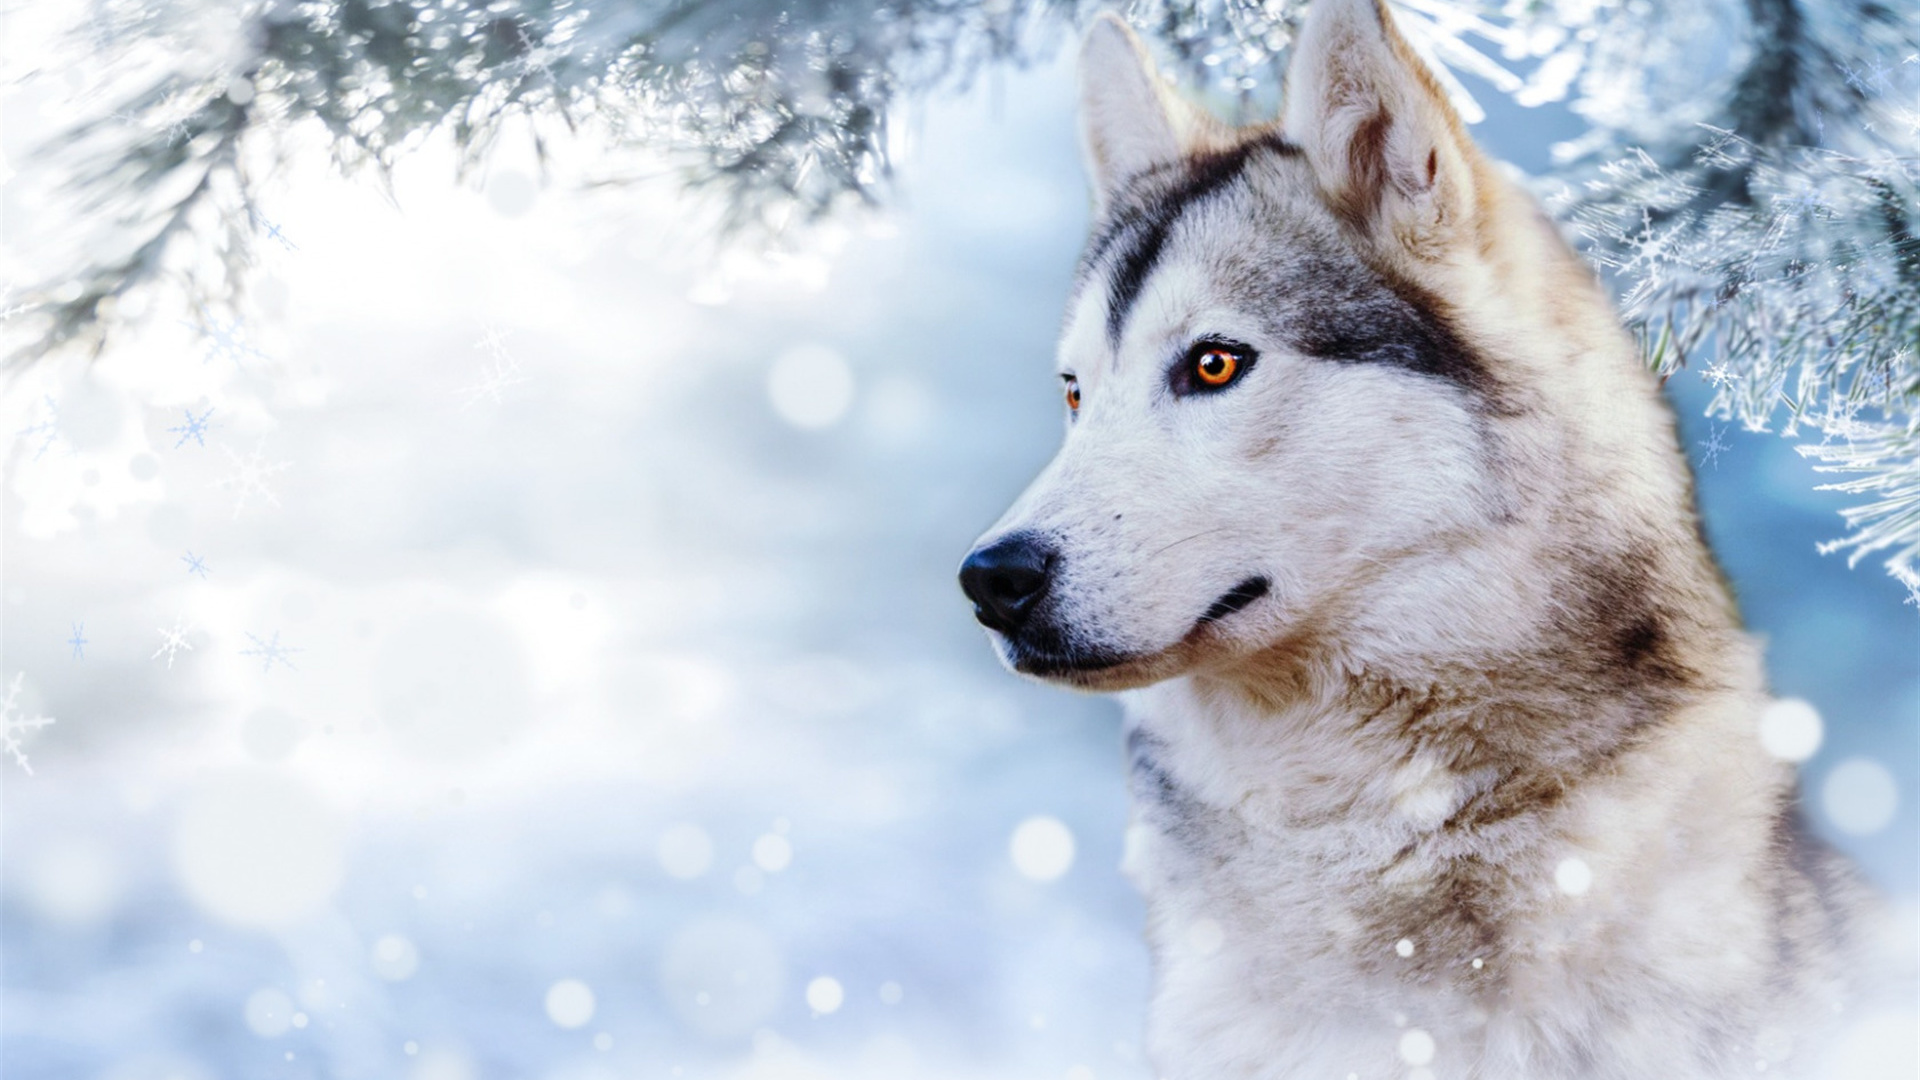 husky, beautiful dog, winter, snow, cute animals, dogs